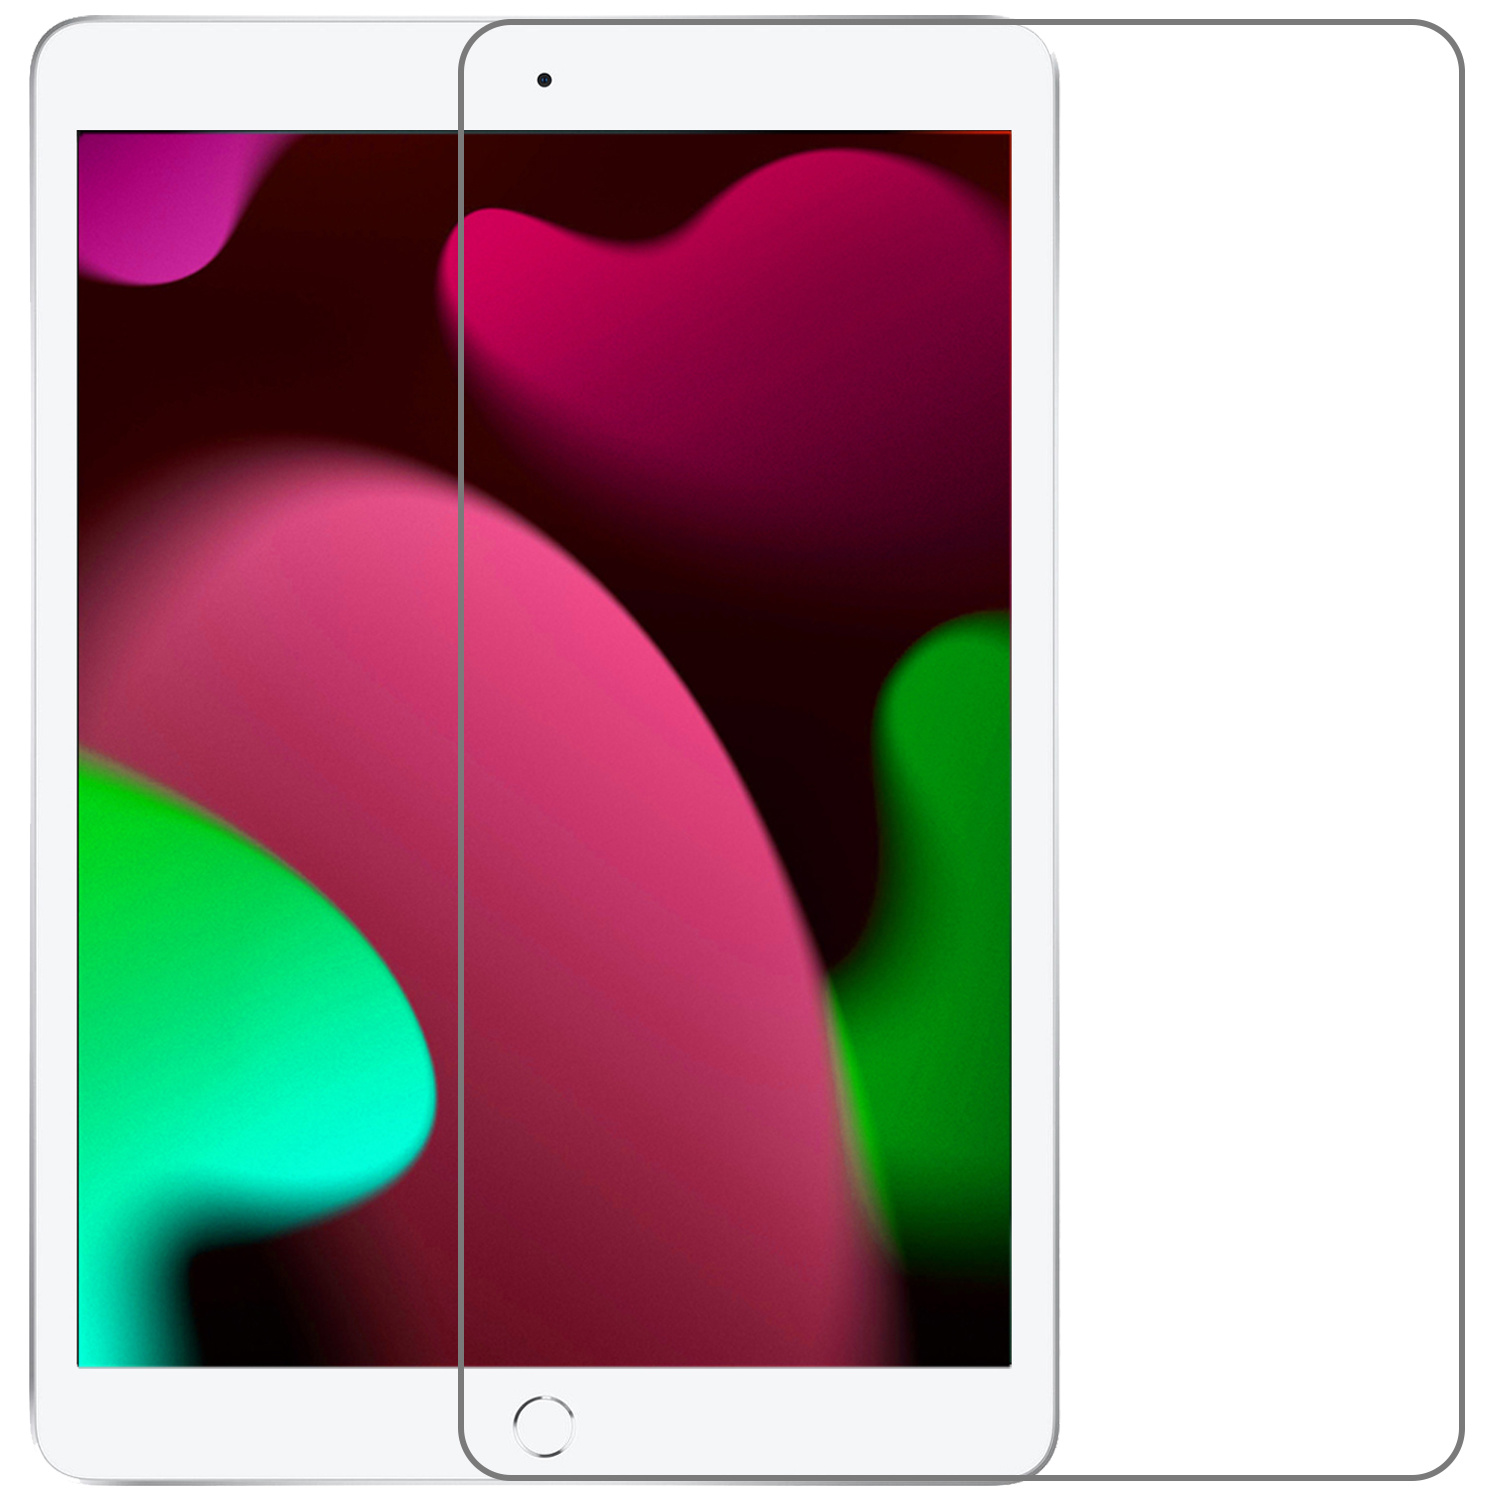 Nomfy iPad 10.2 2020 Screenprotector Bescherm Glas - iPad 10.2 2020 Screen Protector Tempered Glass - 2 PACK